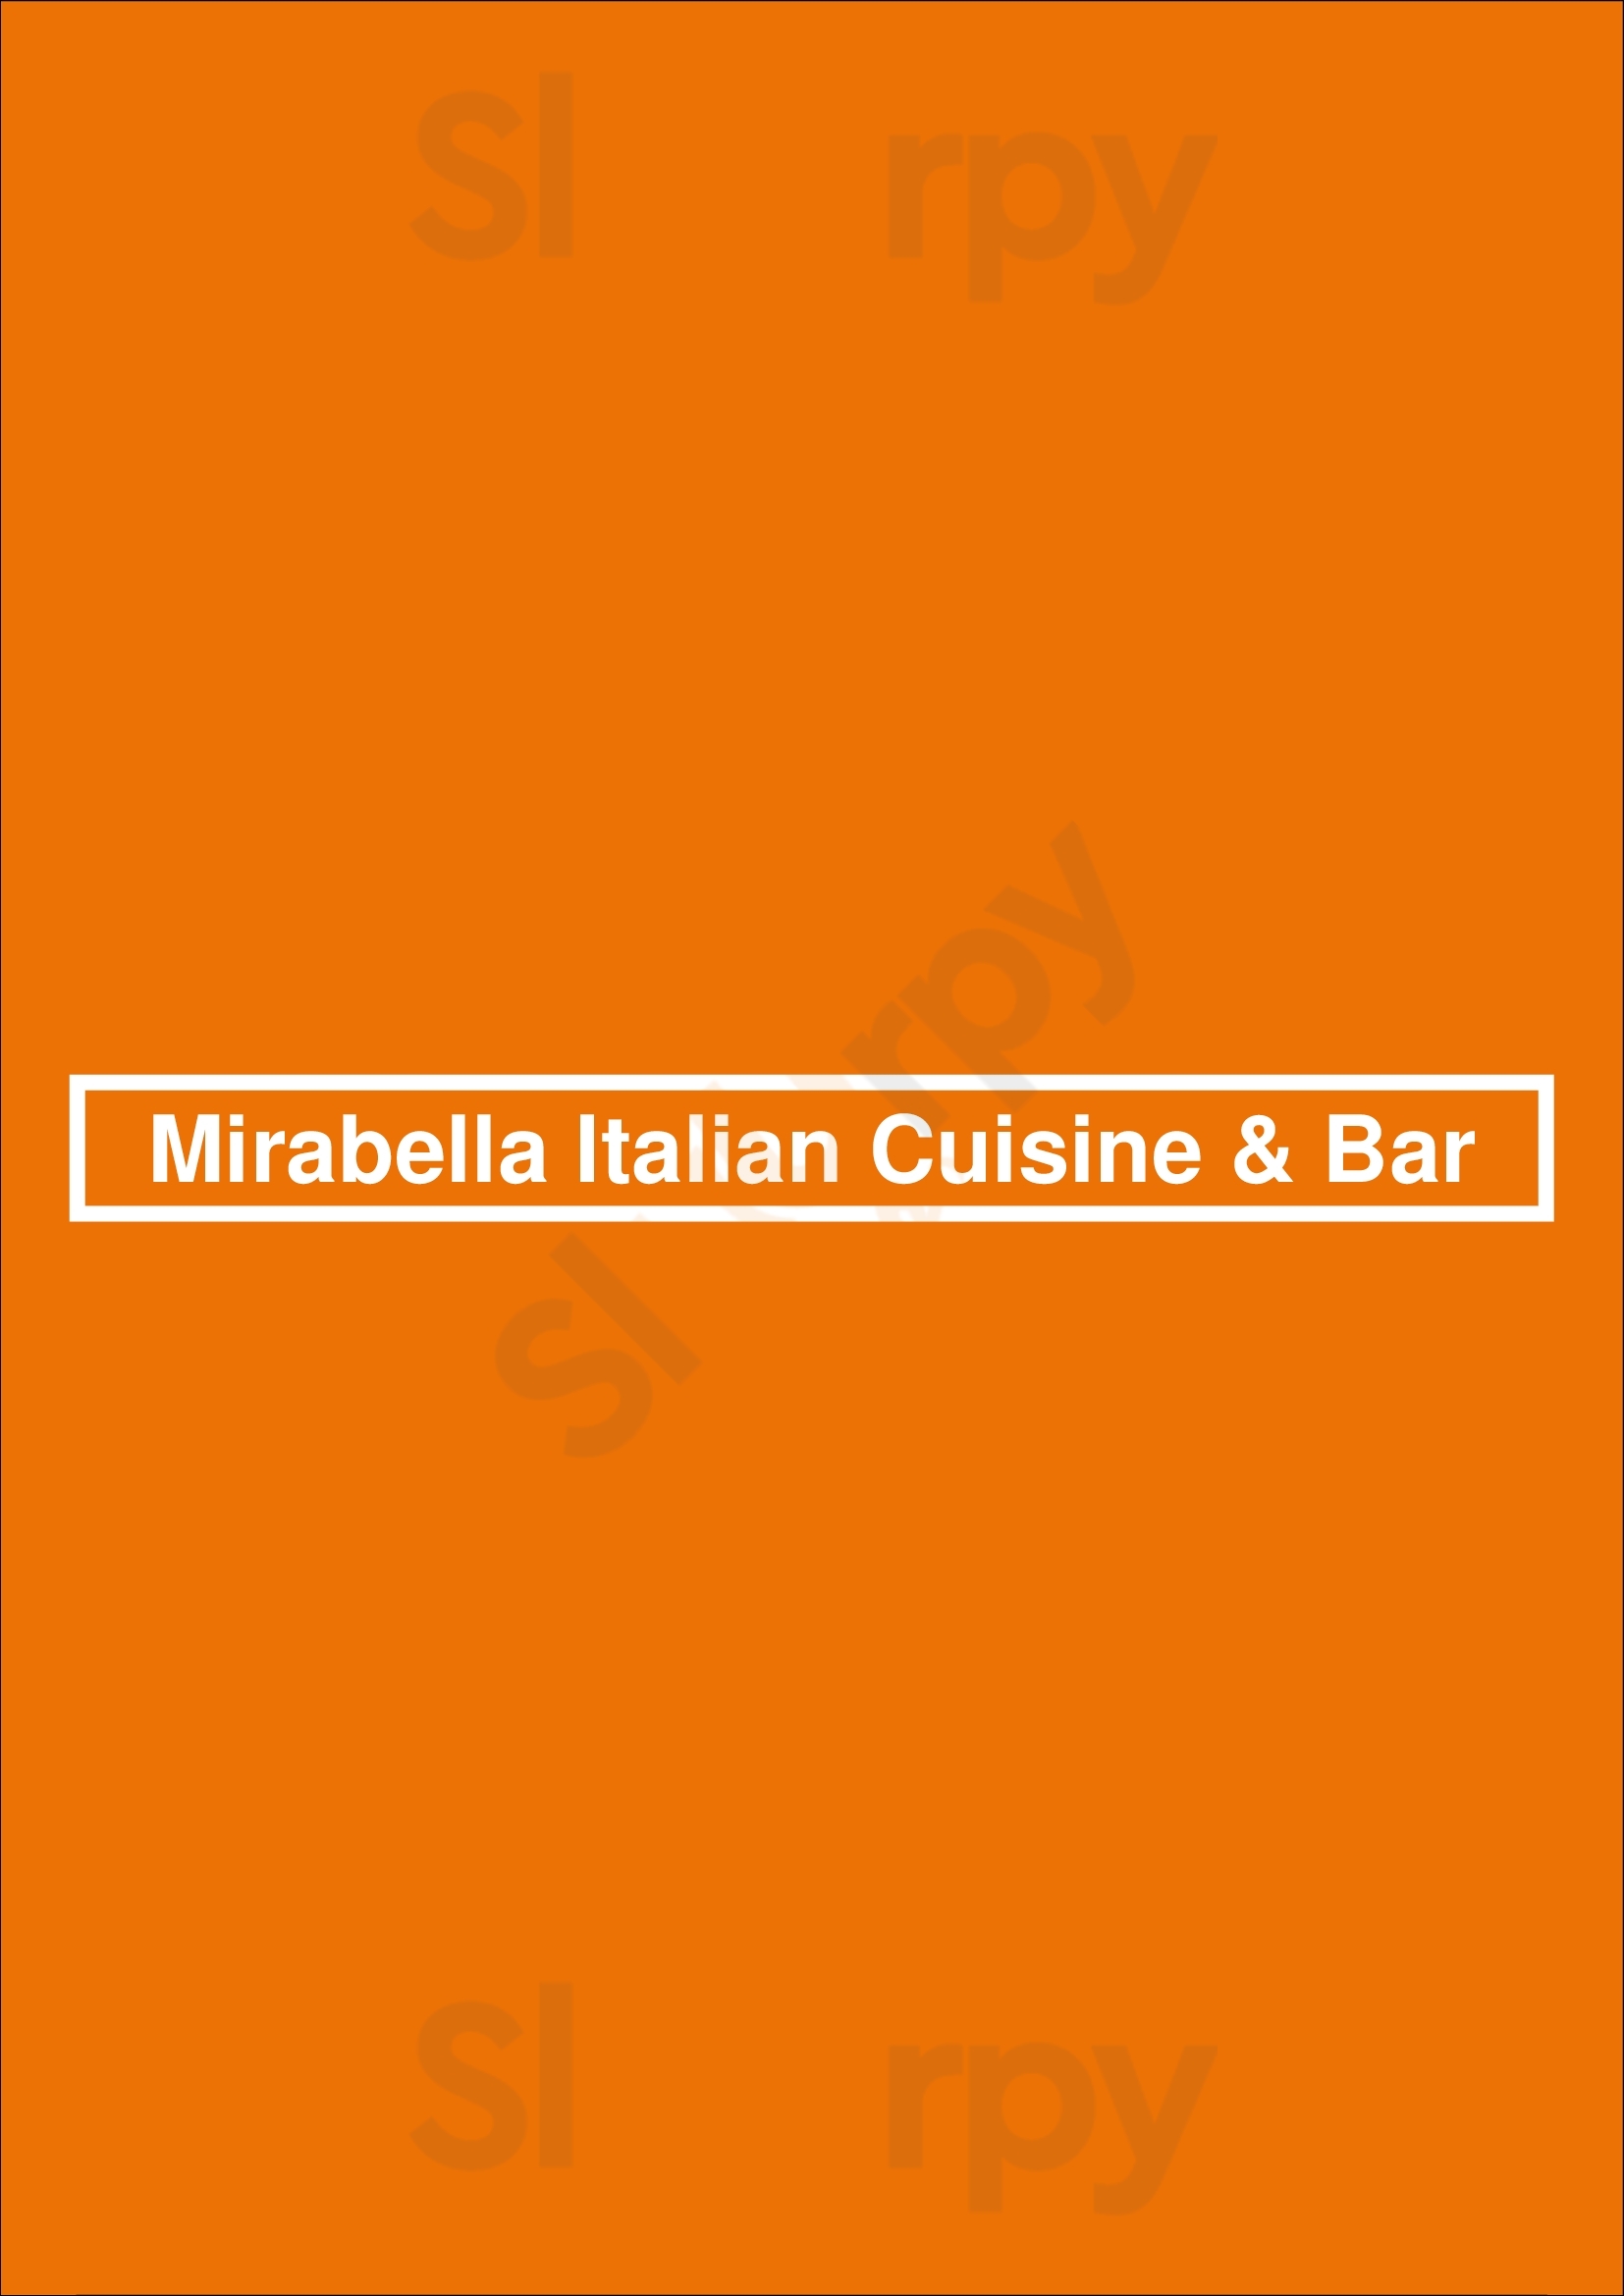 Mirabella Italian Cuisine & Bar Chicago Menu - 1